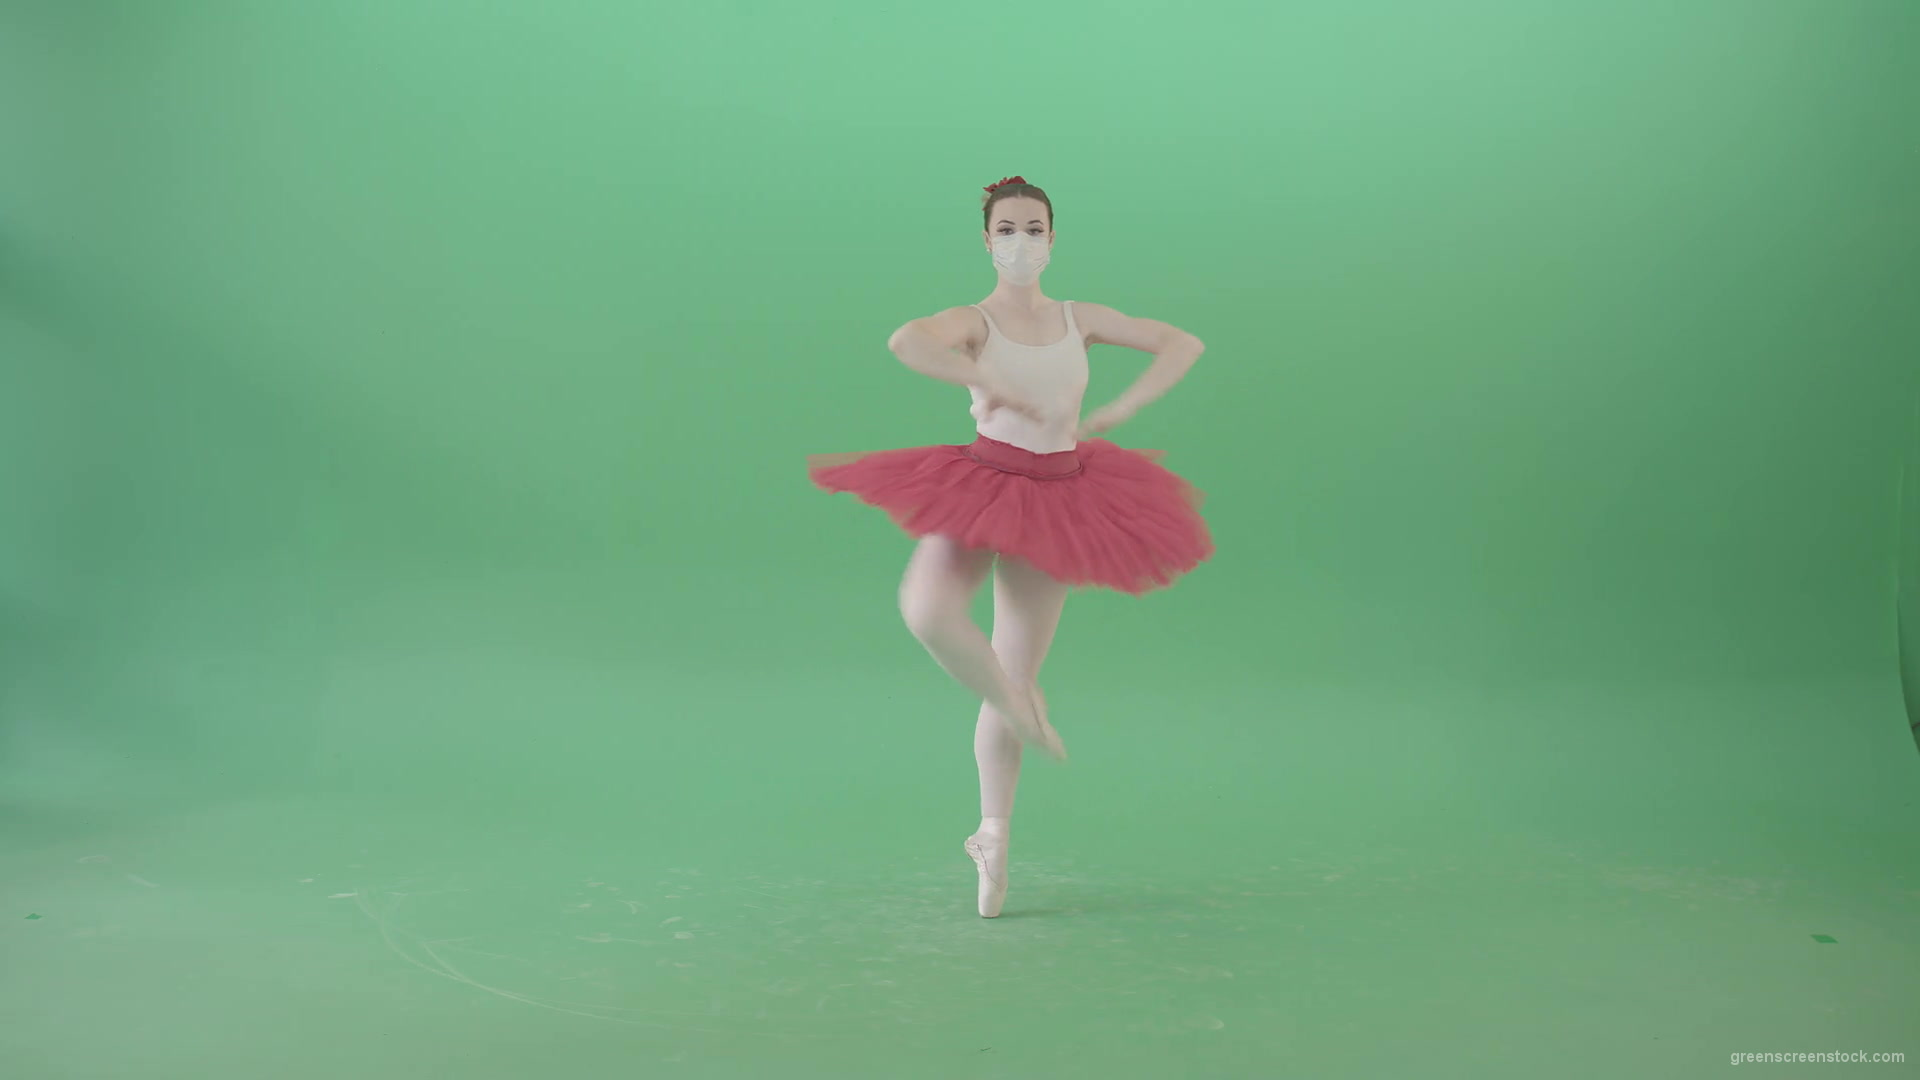 Ballet-Girl-in-Corona-Virus-Mask-Jumping-like-ballerina-isolated-on-green-screen-4K-Video-Footage-1920_009 Green Screen Stock